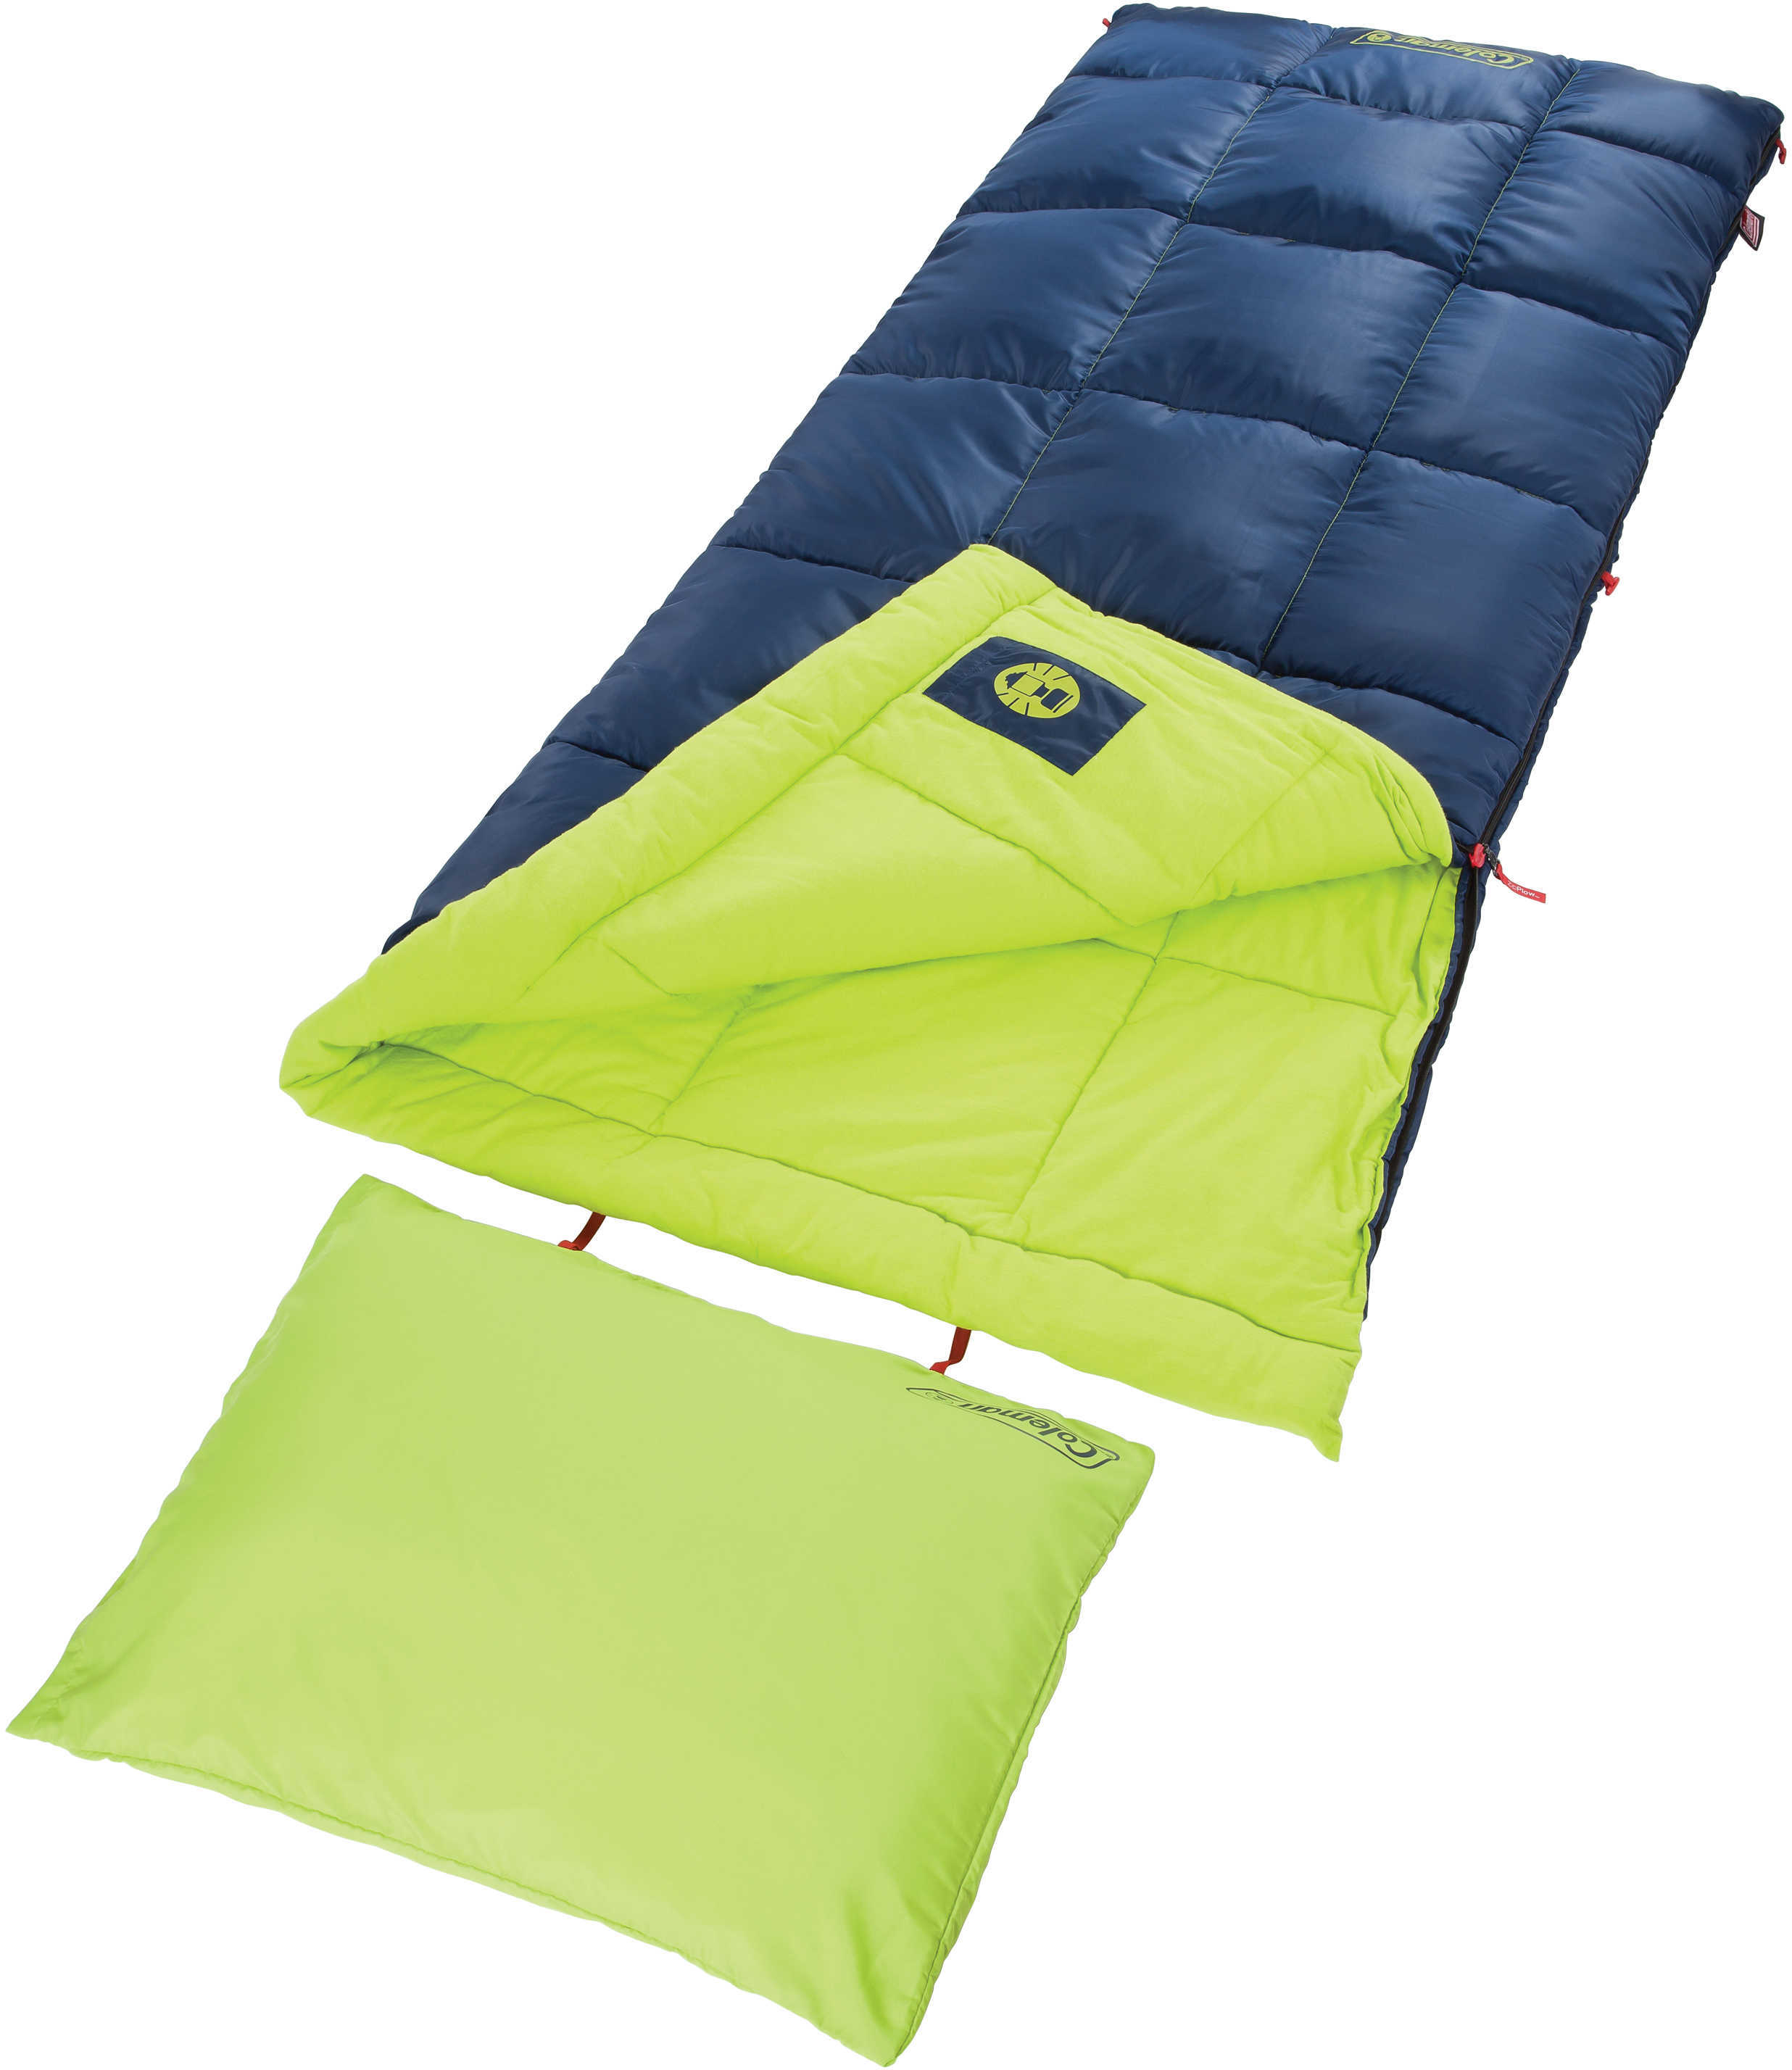 Coleman Heaton Peak 40 Degree Sleeping Bag with Pillow